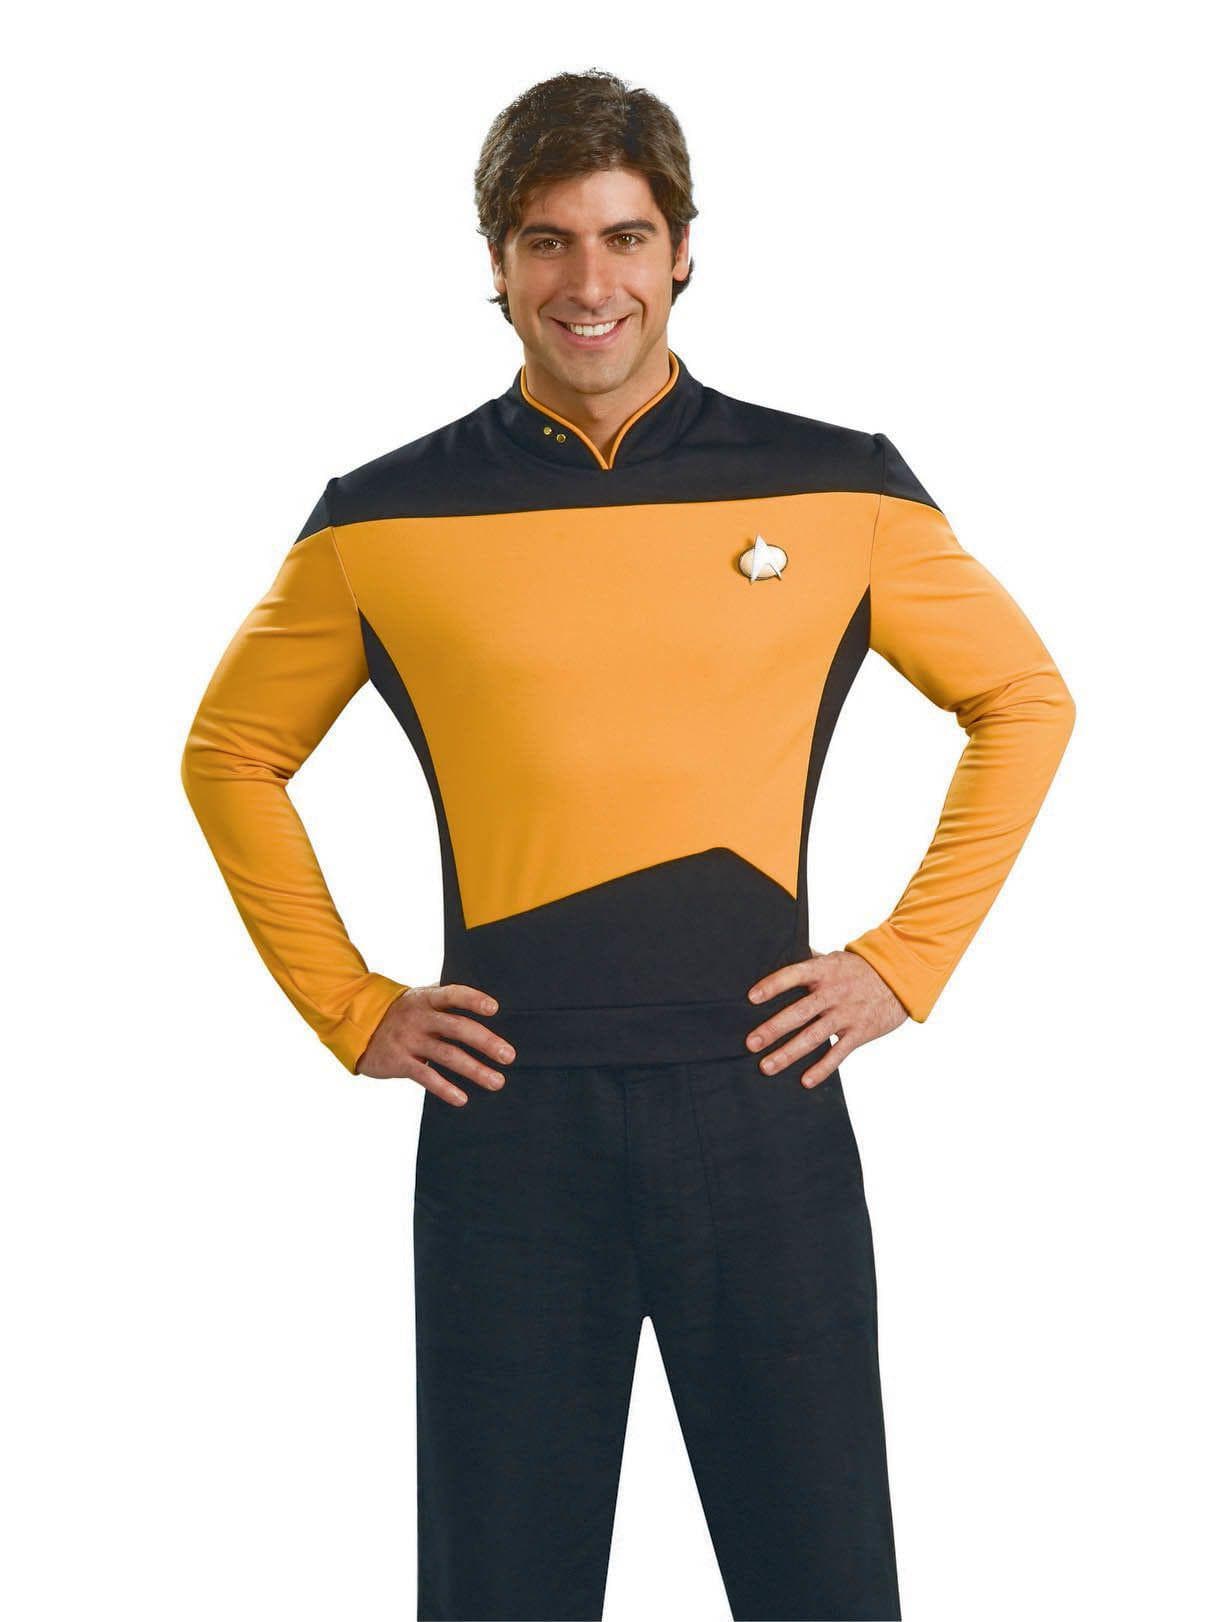 Men's Star Trek: The Next Generation Captain Kirk Costume - Deluxe - costumes.com